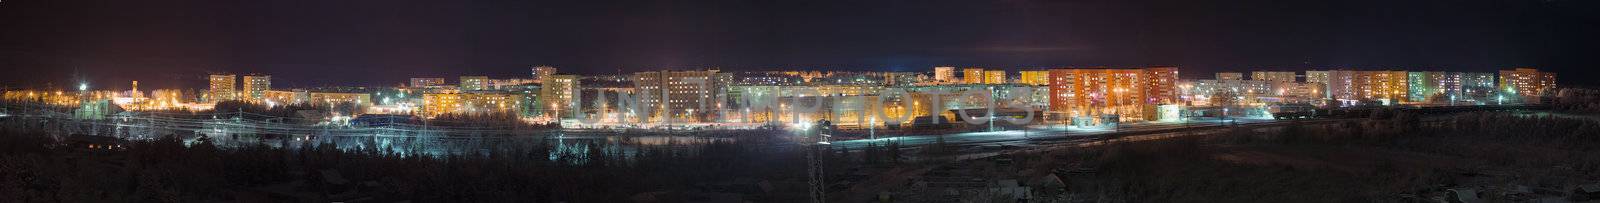 Panorama - view the night city lights illuminated